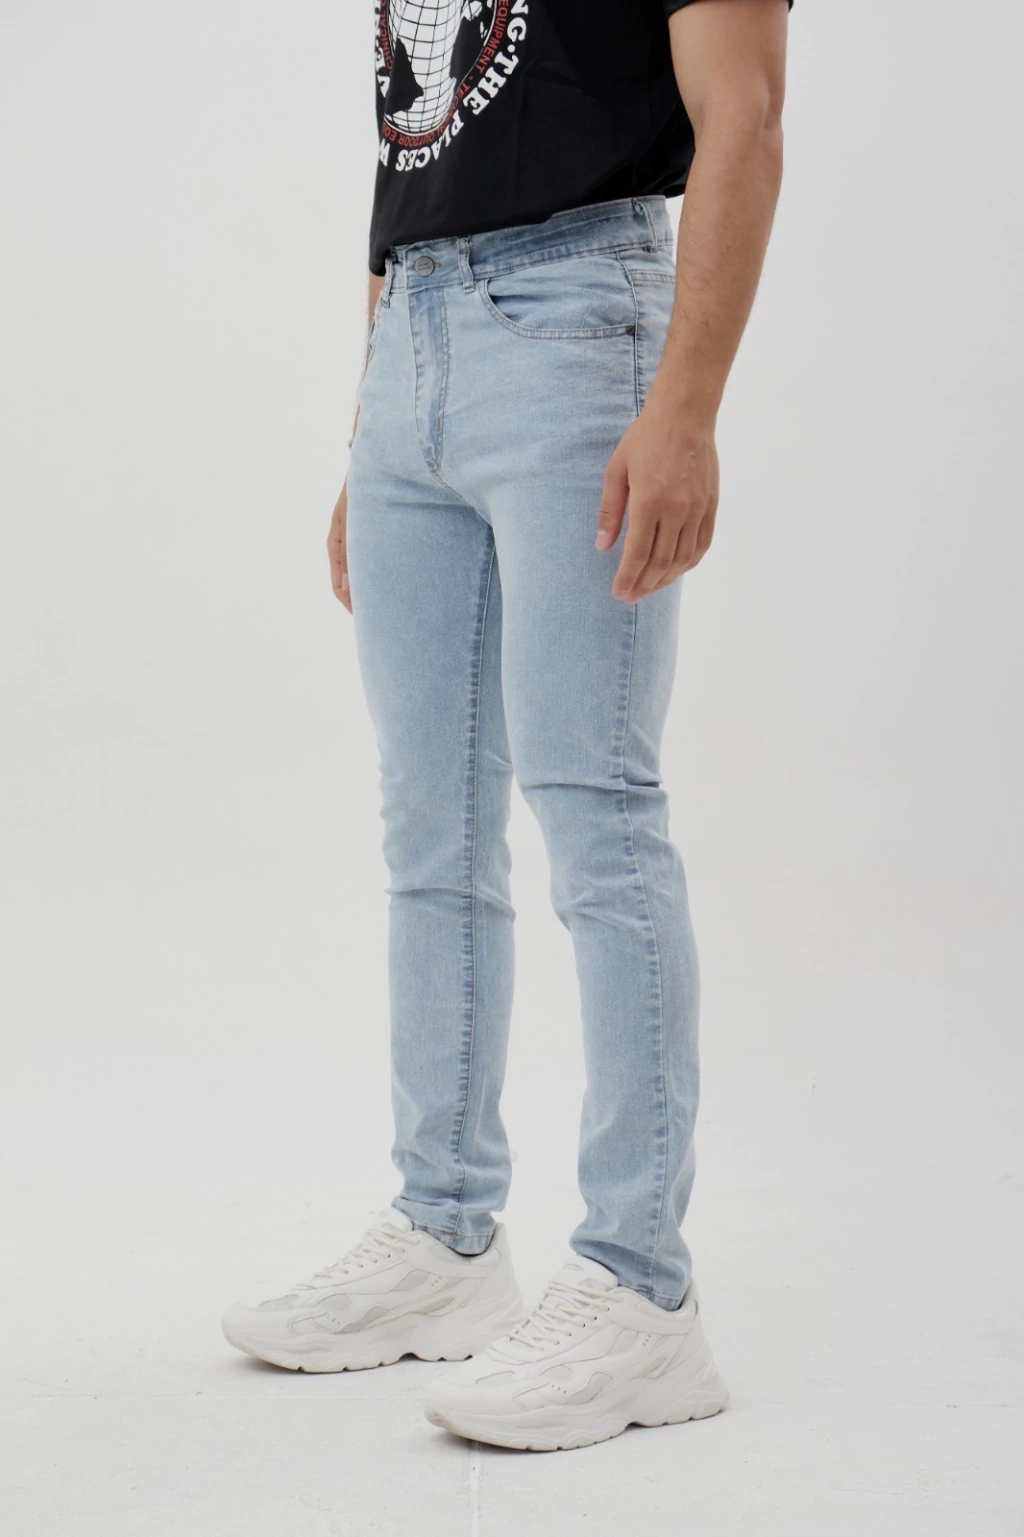 JEAN COSME - Comprar en Mojo Jeans